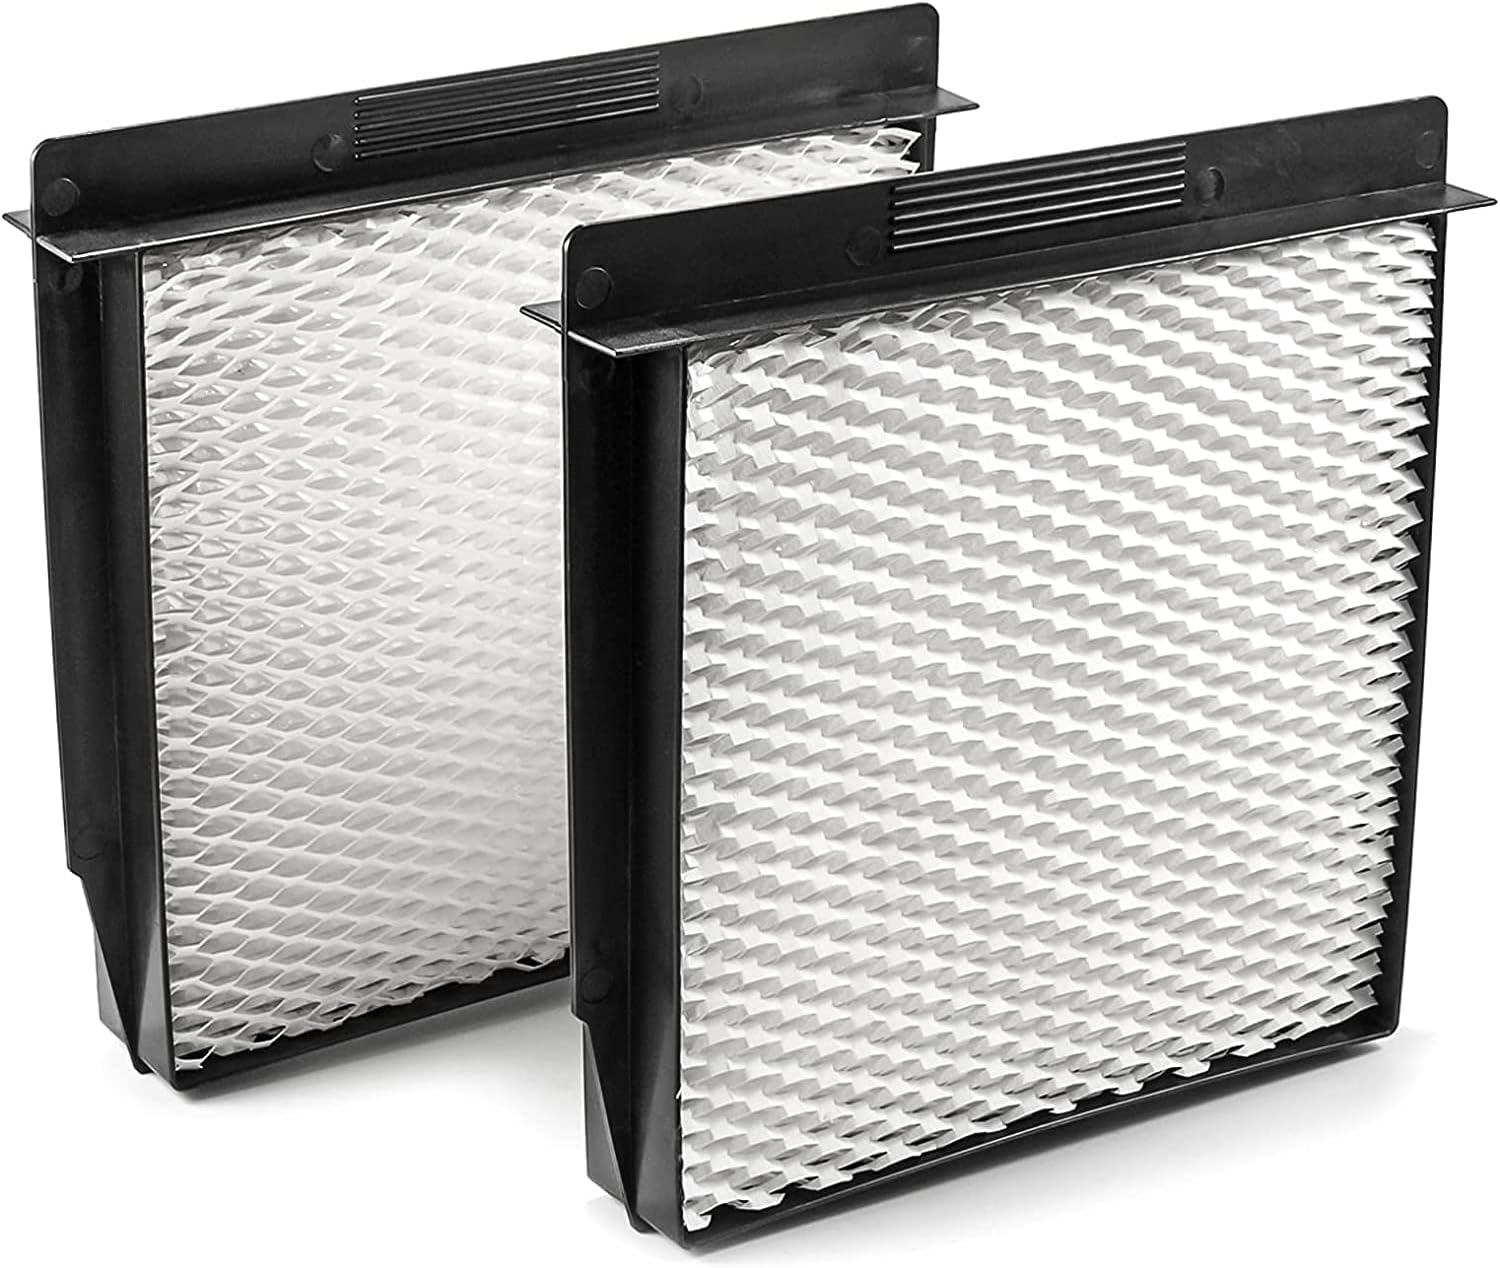 Ximoon 1040 B40 Super Wick Humidifier Filters Replacement for Essick Air Humidifier Filters Fits 3D6-100 5D6-700 7D6-100 D46-720 E27-0